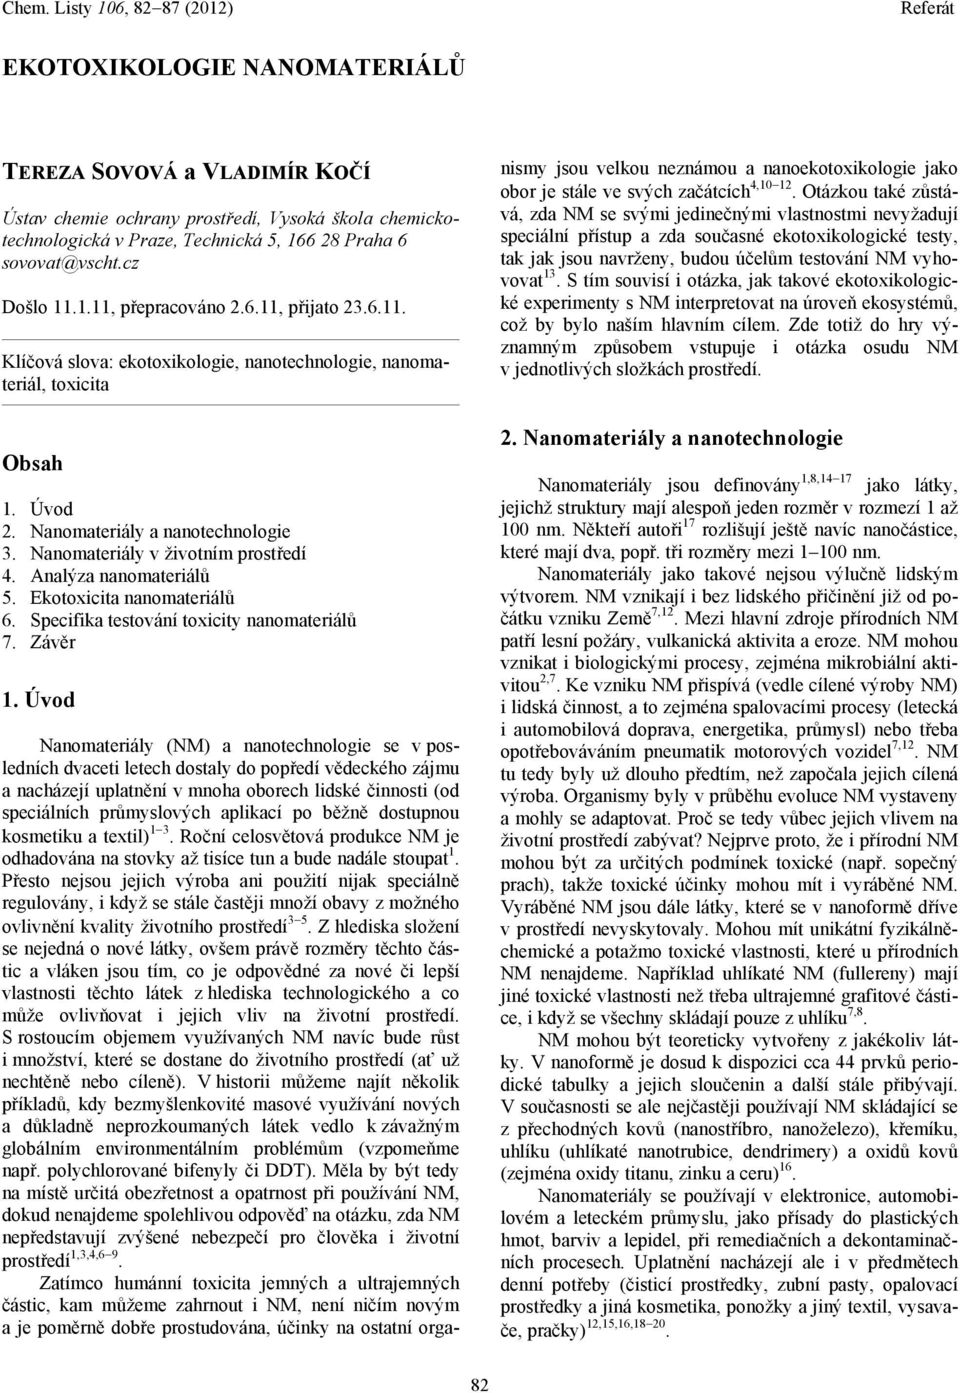 Analýza nanomateriálů 5. Ekotoxicita nanomateriálů 6. Specifika testování toxicity nanomateriálů 7. Závěr 1.